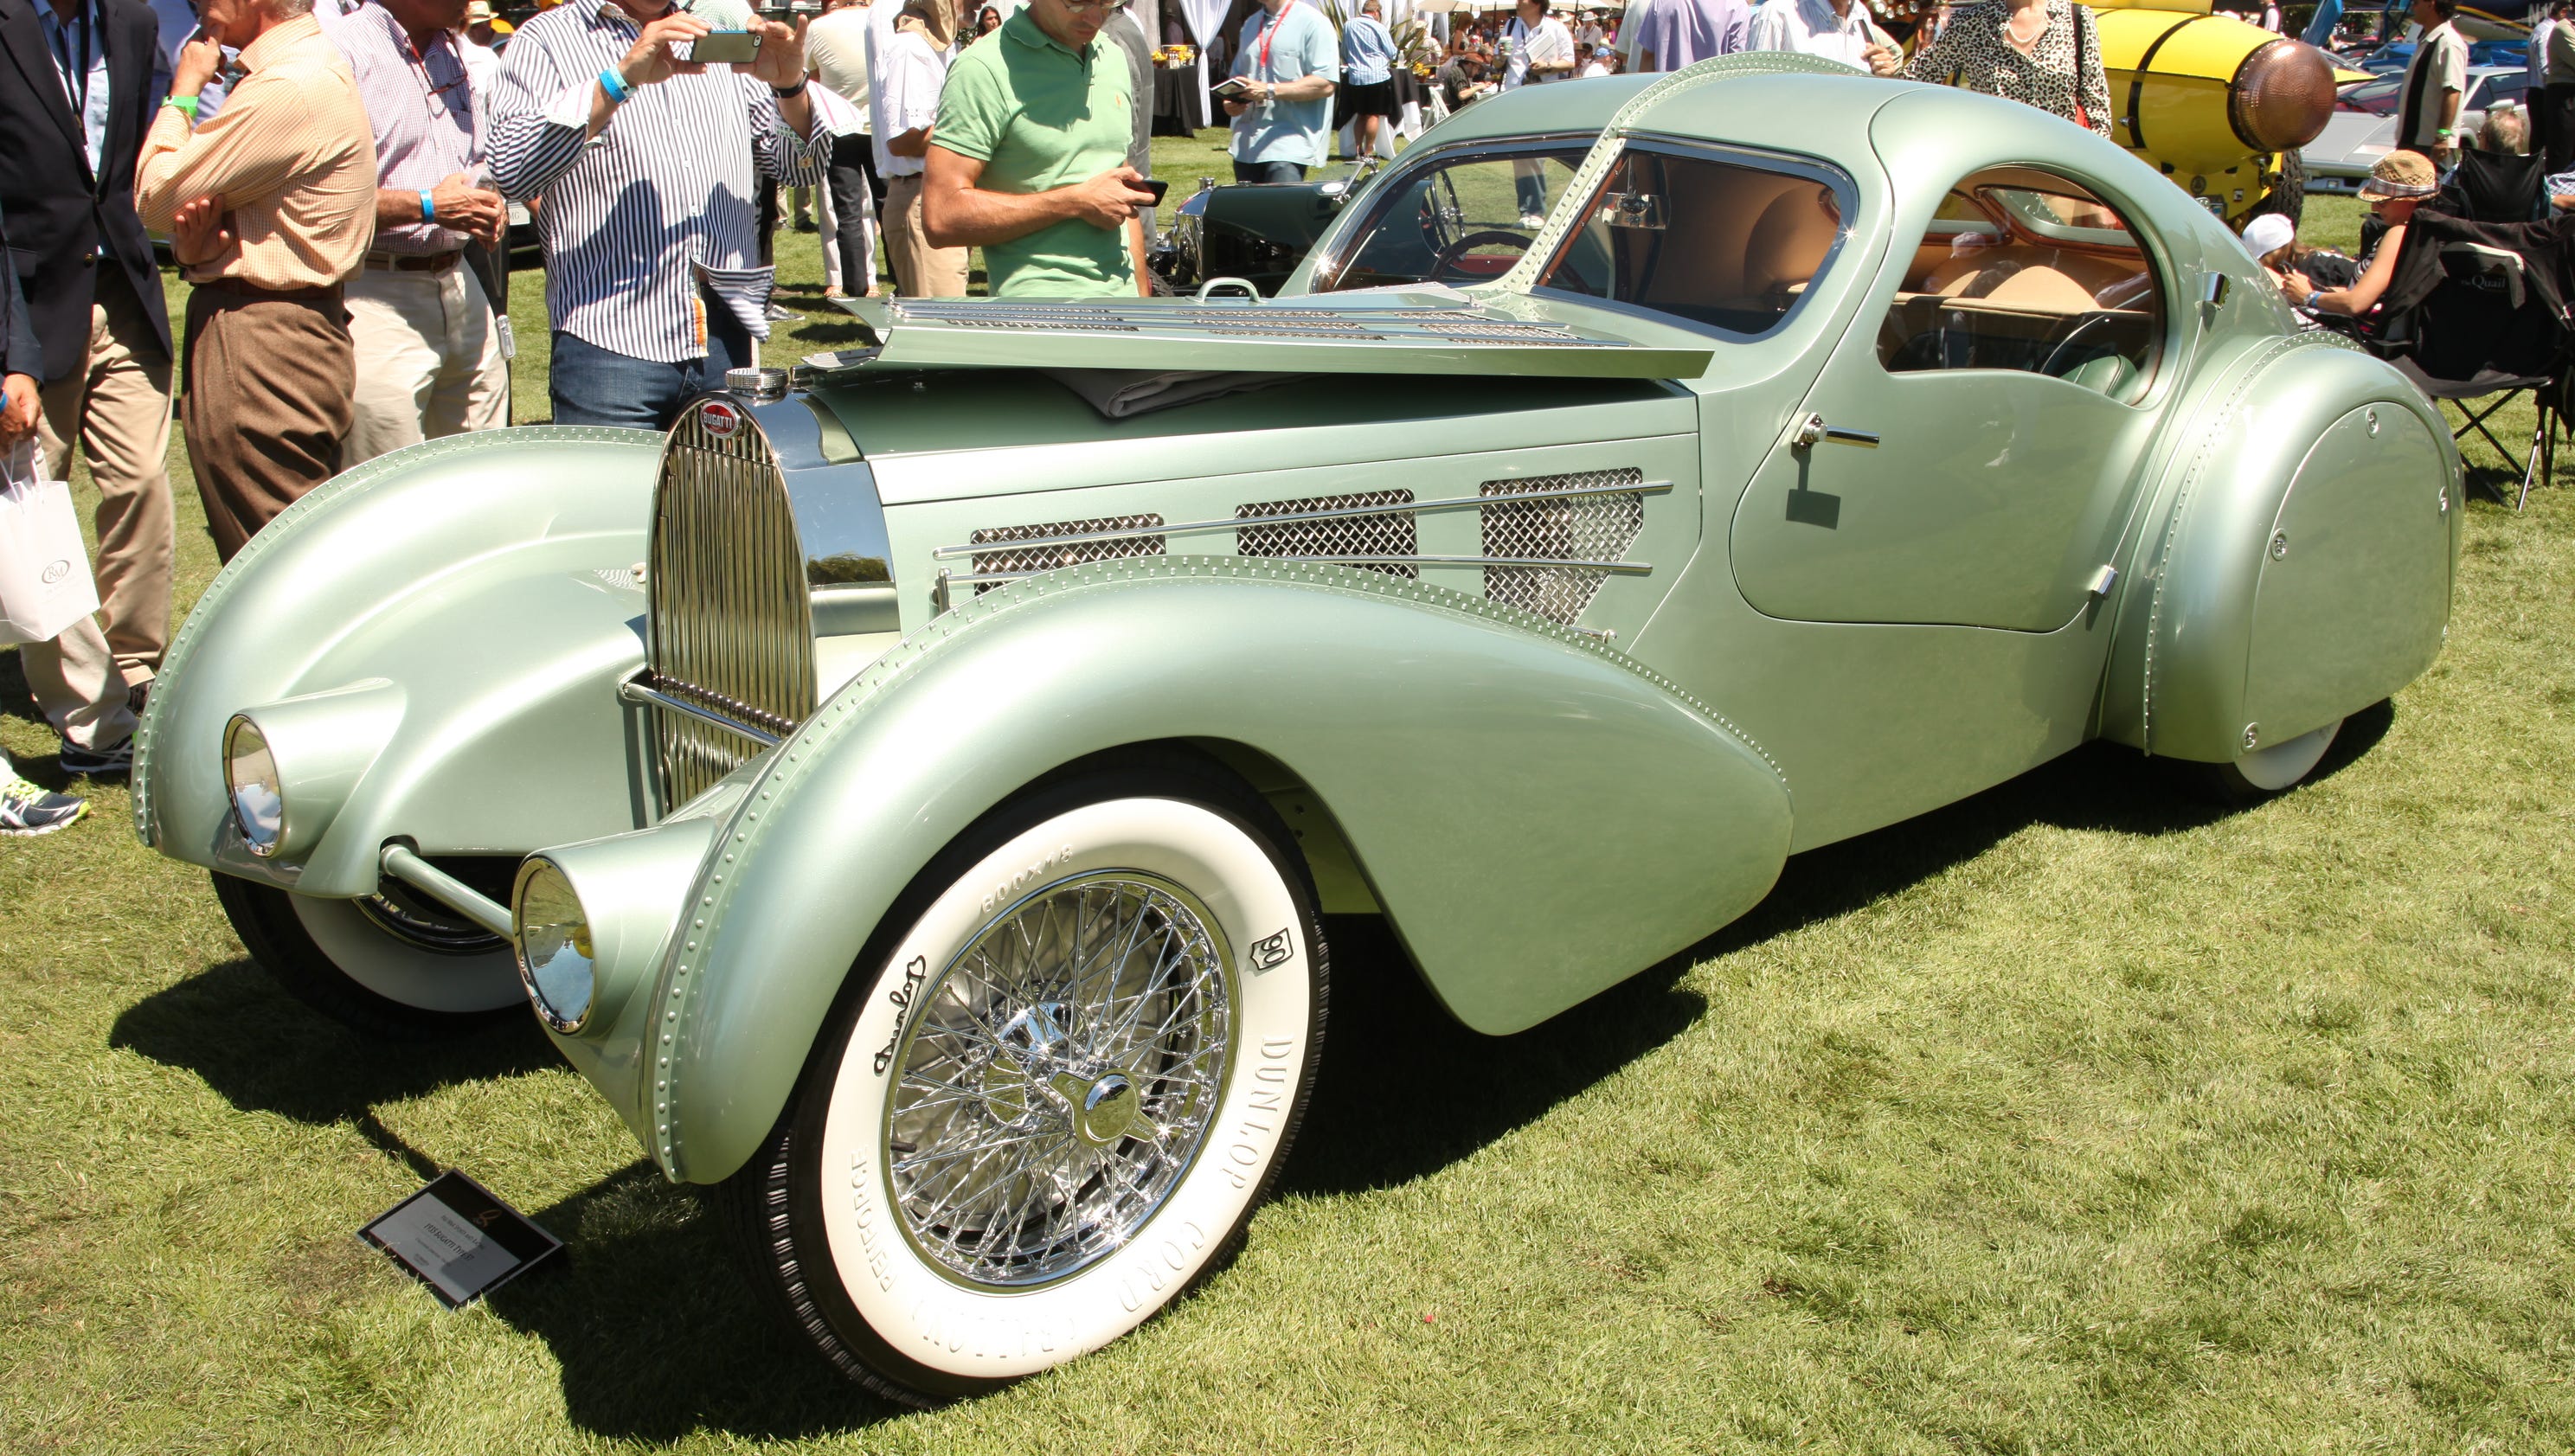 Show Us Your Car: A famous 1935 Bugatti is reborn3200 x 1680